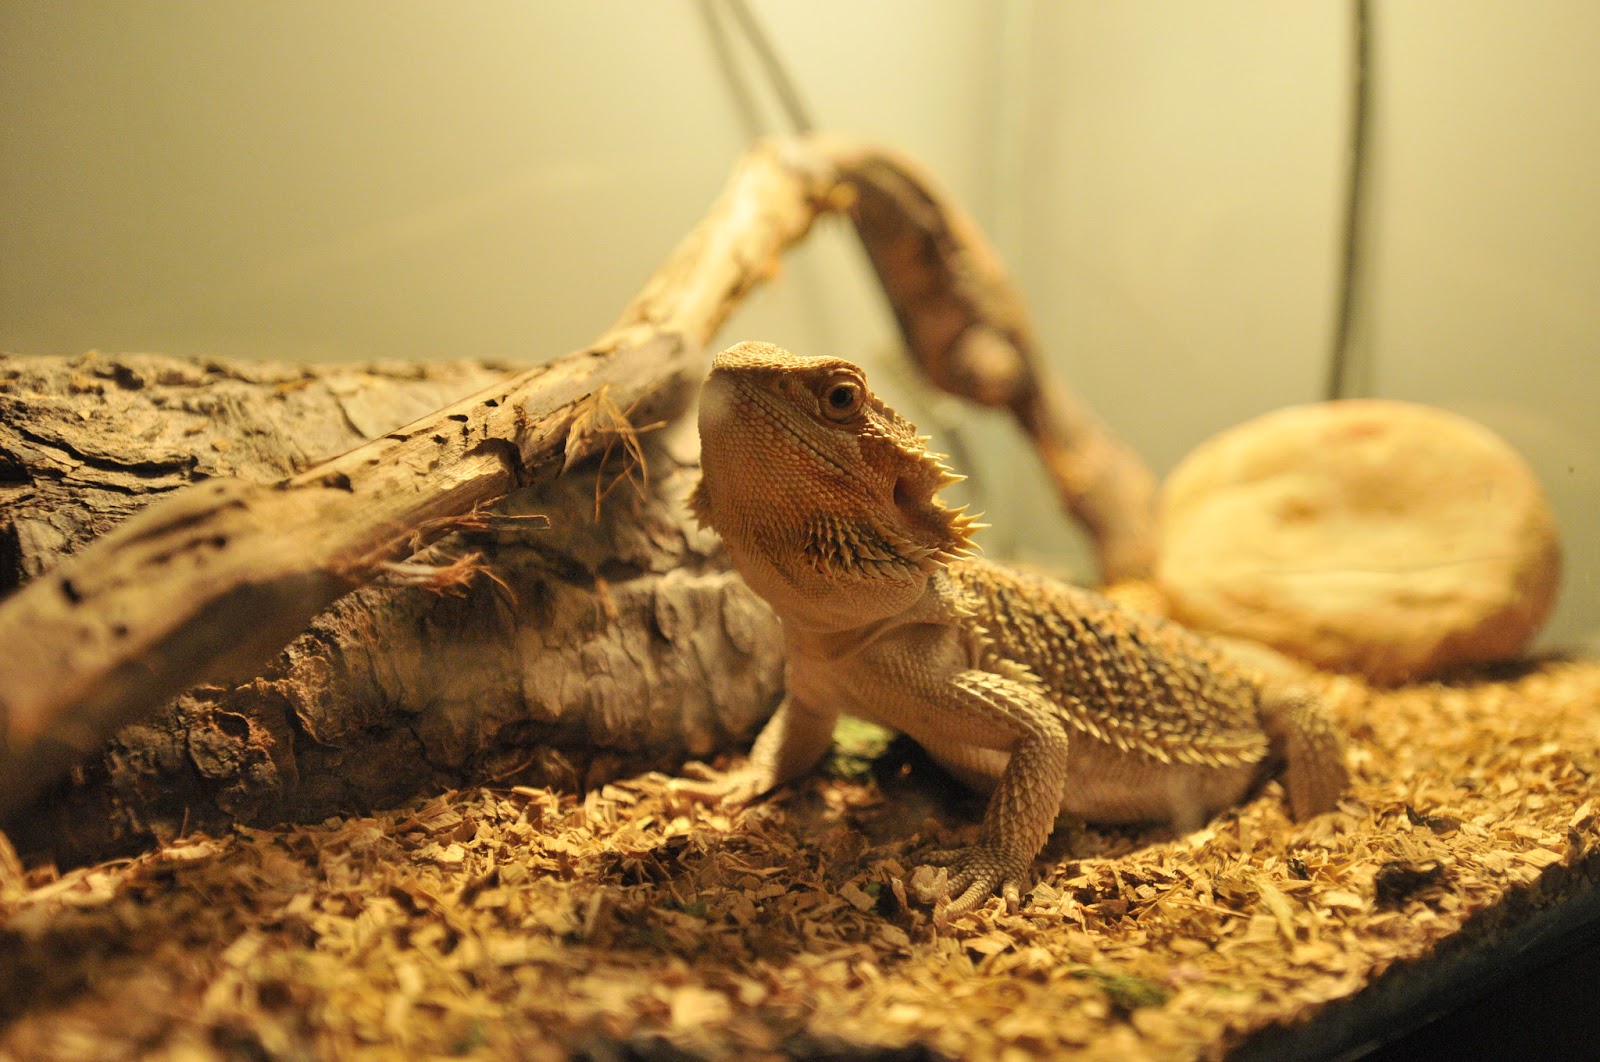 Bearded dragon in a minimalist enclosure